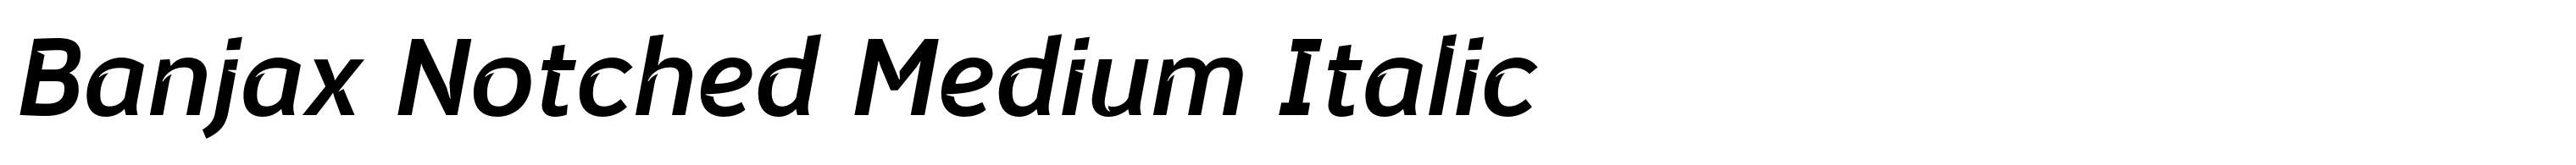 Banjax Notched Medium Italic